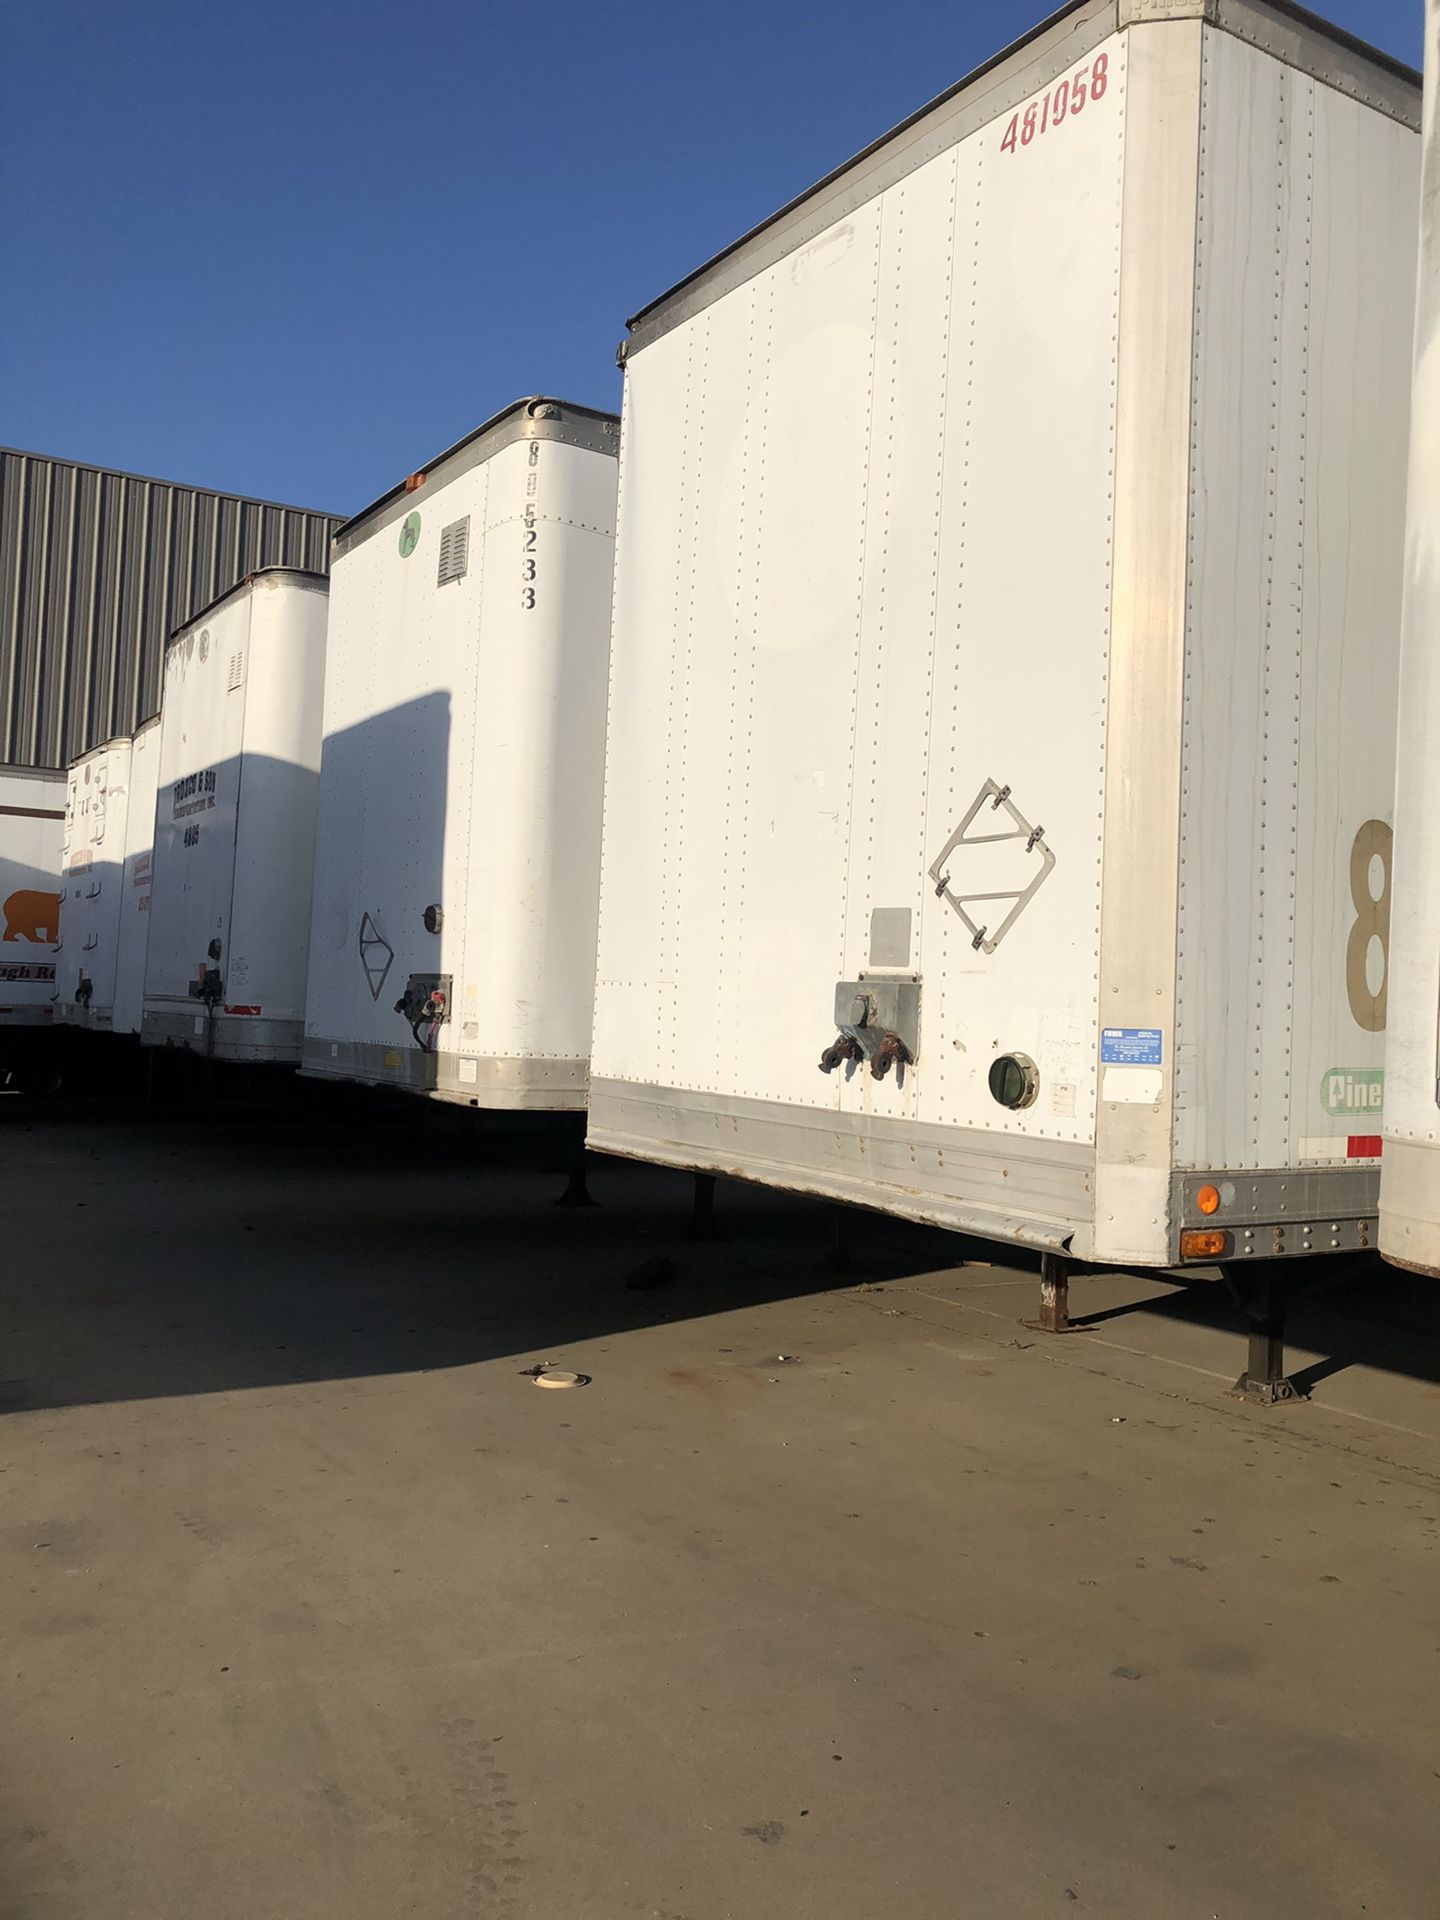 48’ storage trailers